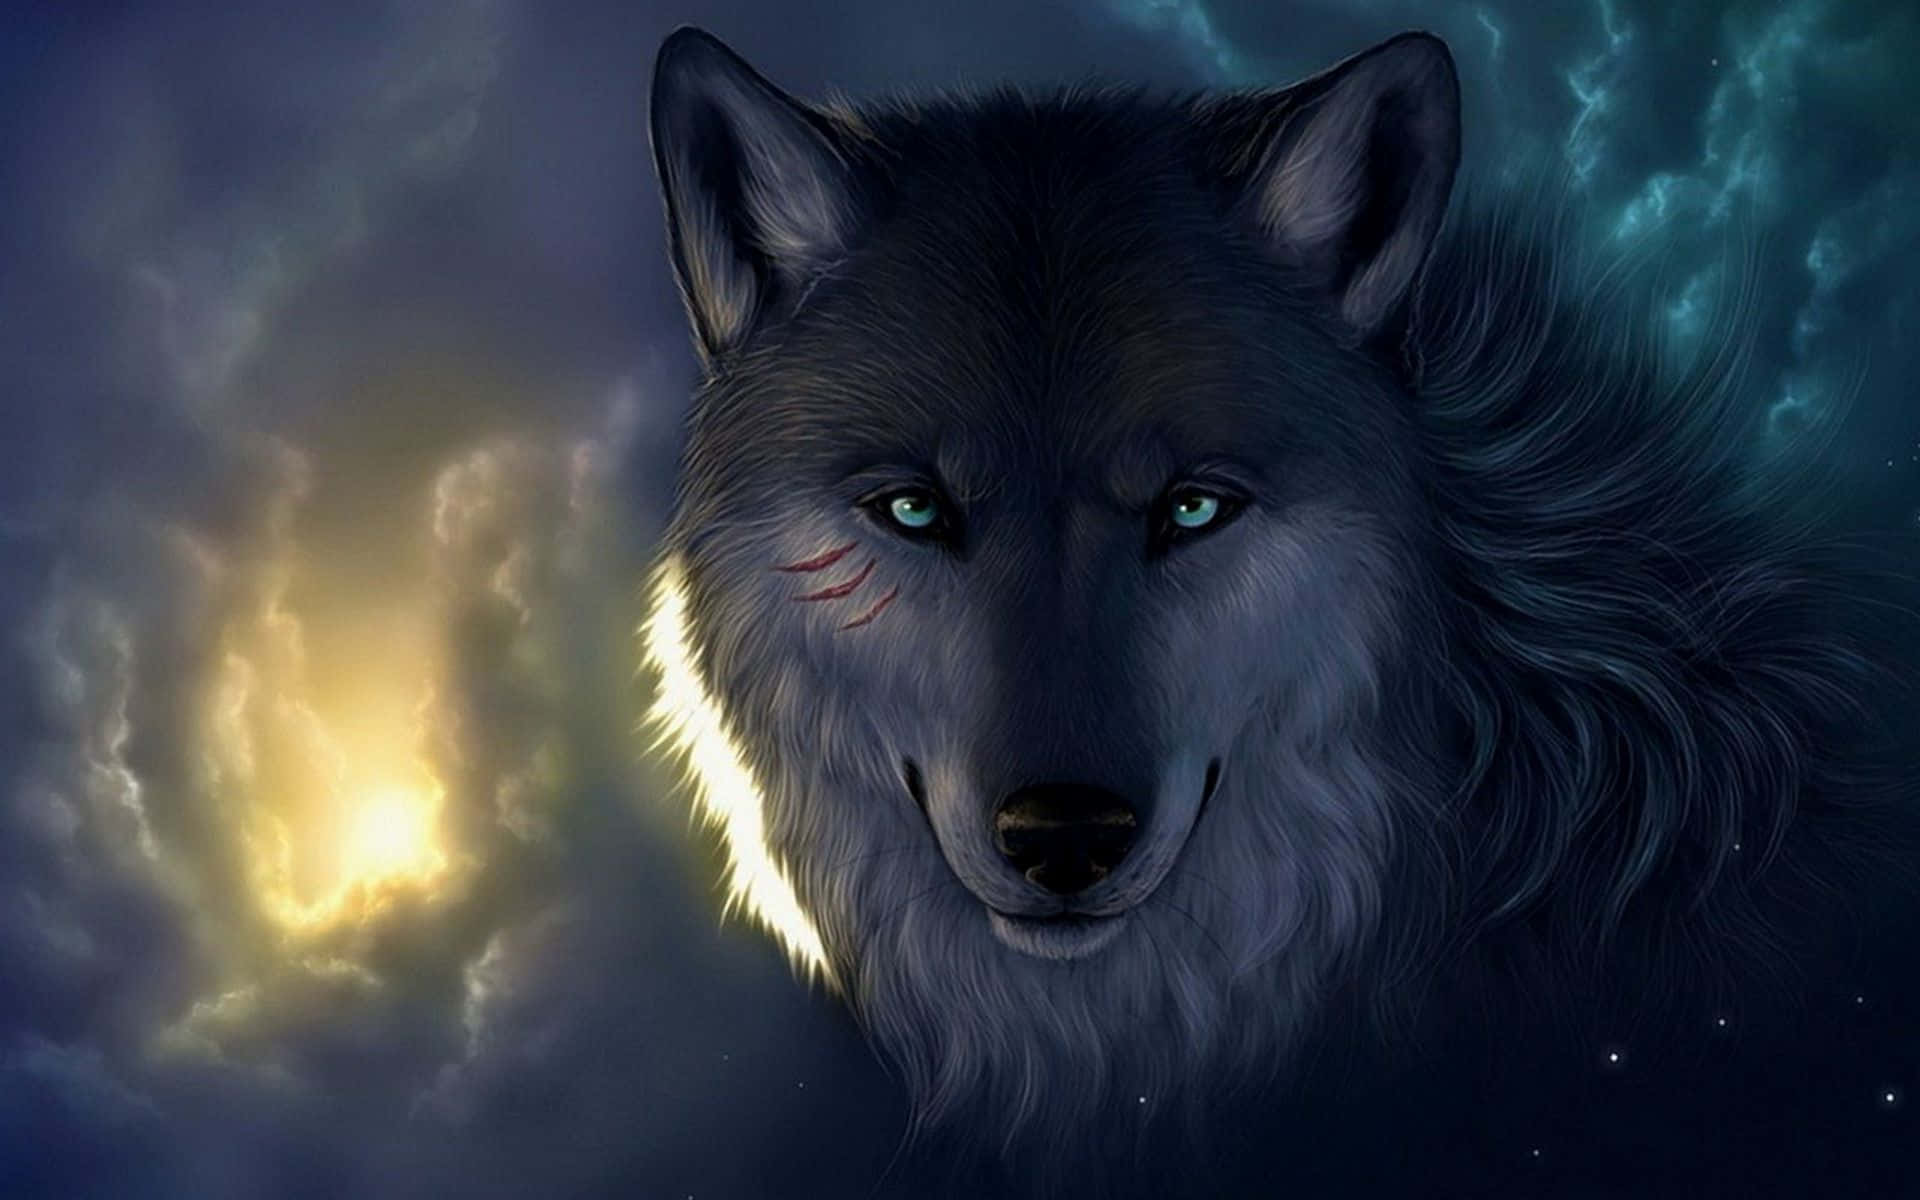 In Moonlight, A Werewolf Howls